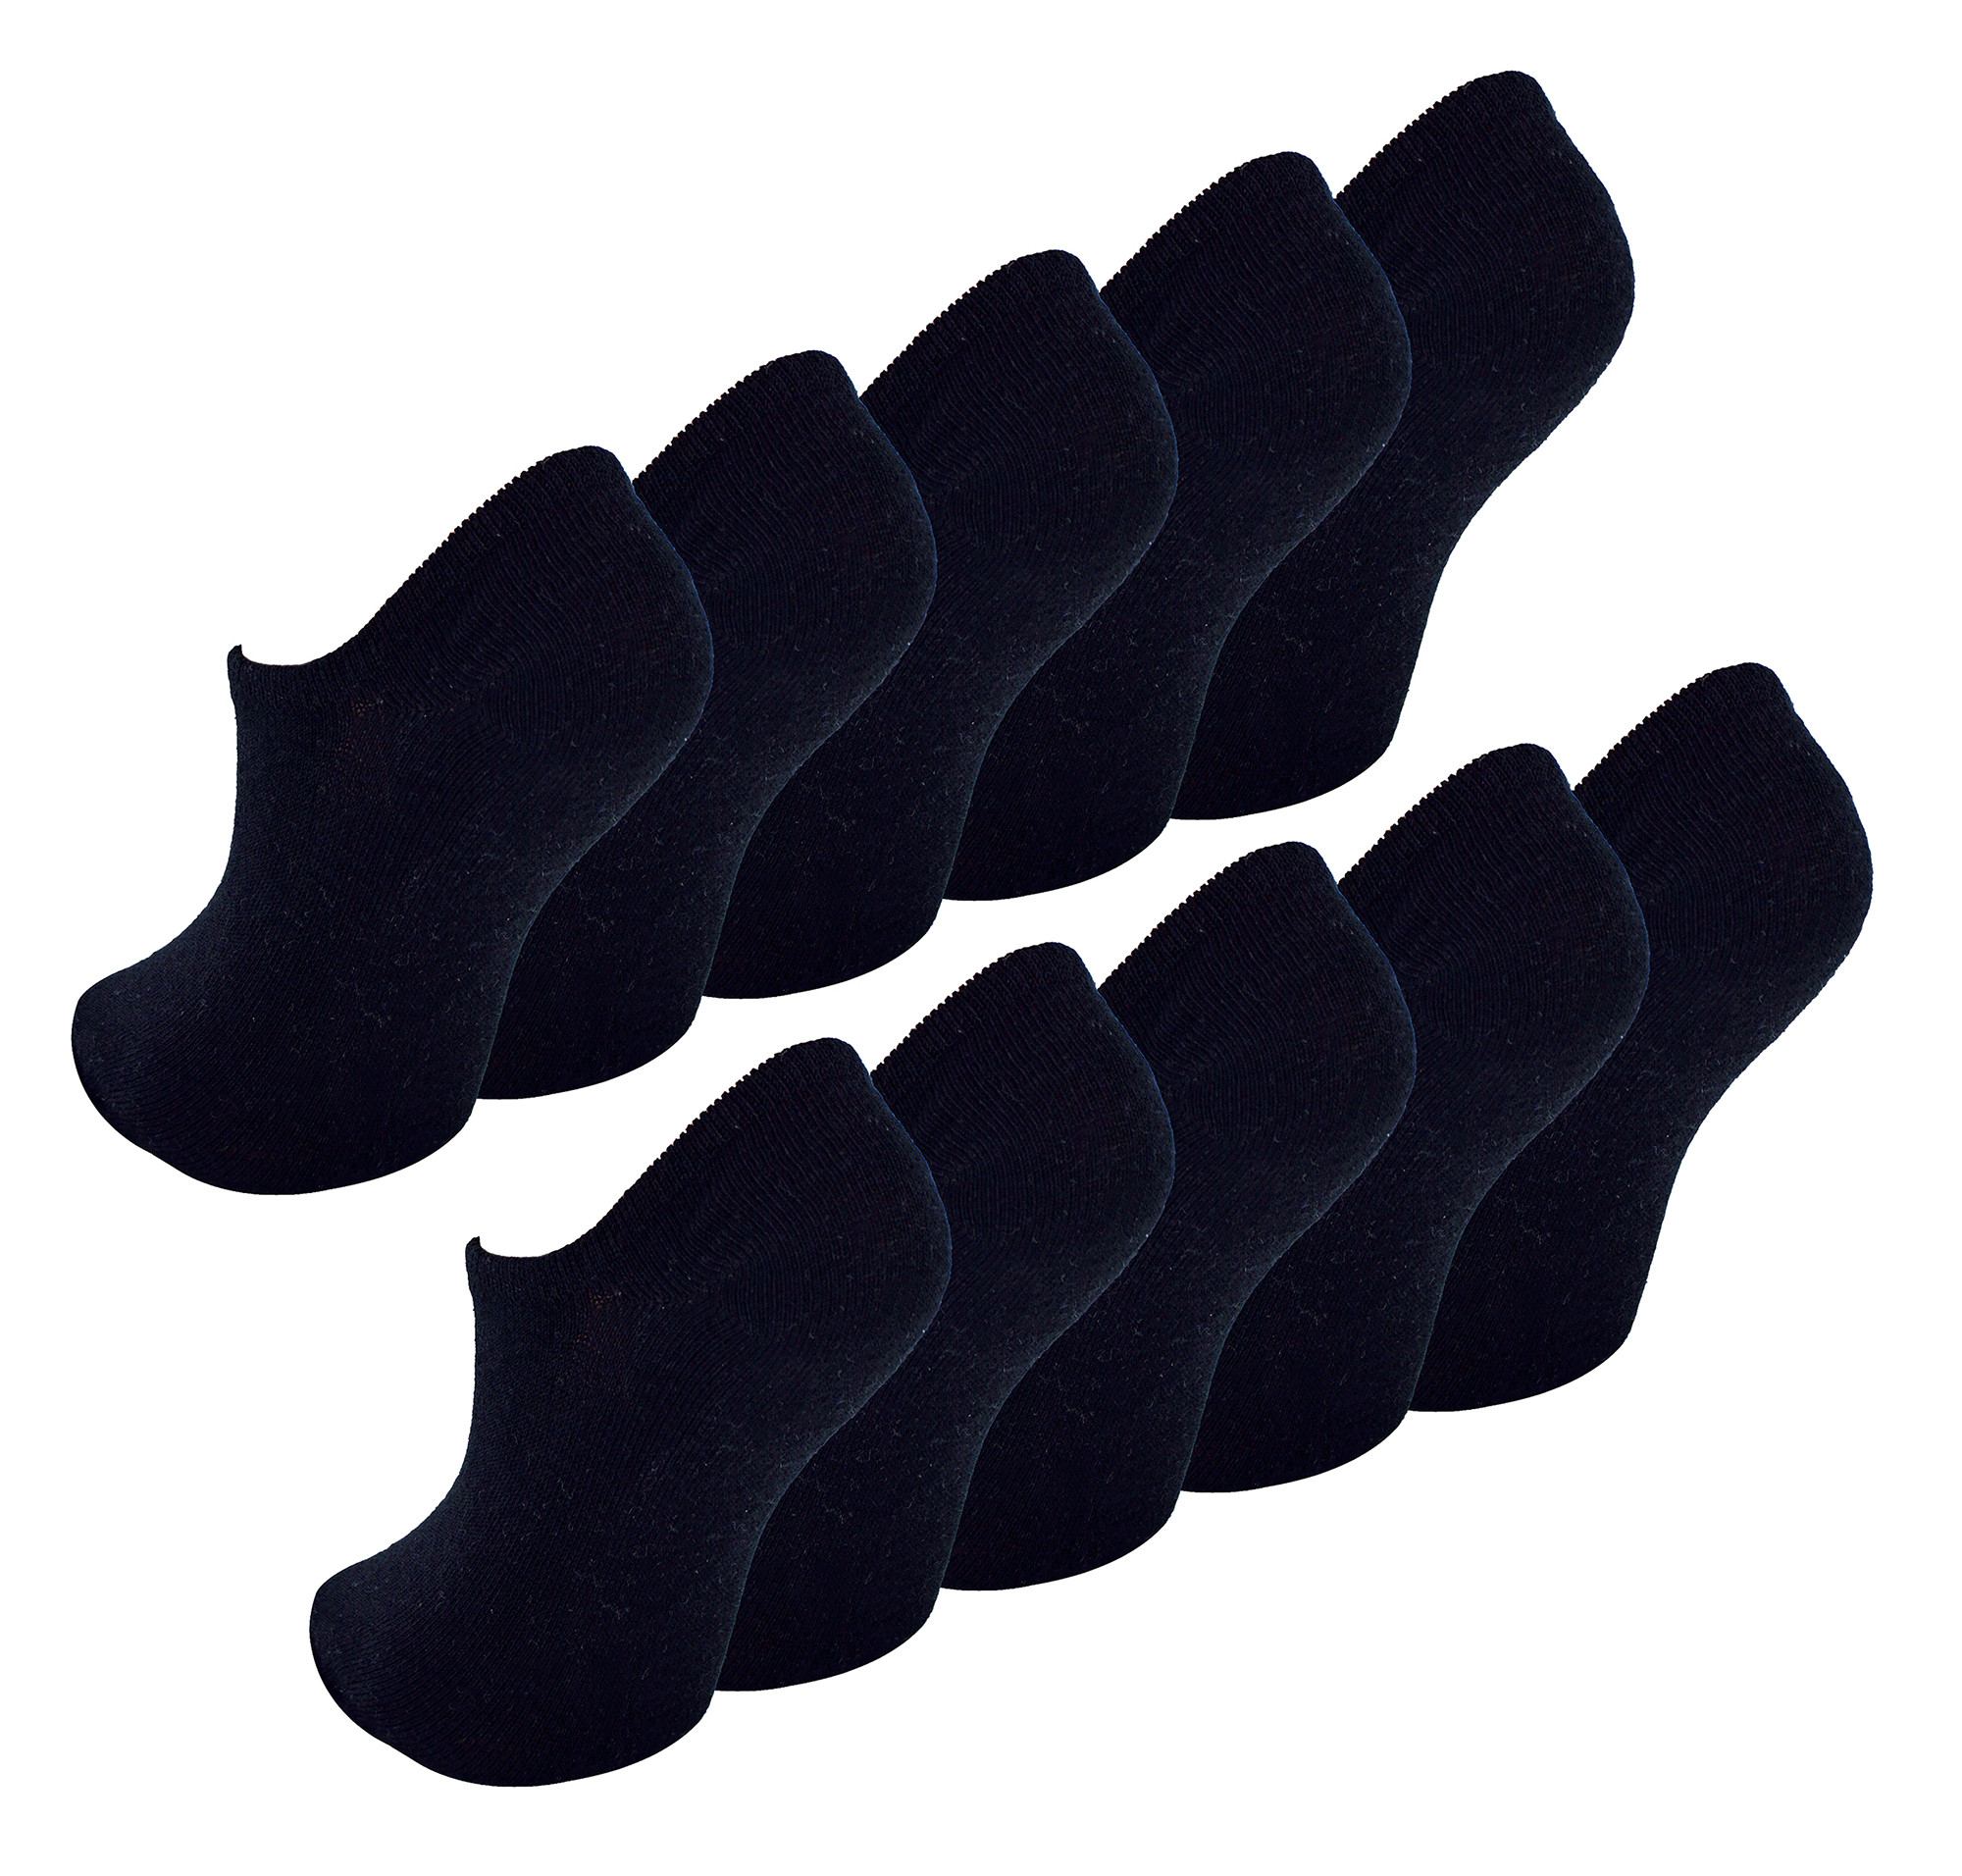 SK722 Kids 5 Pack Invisible Socks For School BLK X10 - Gifyu